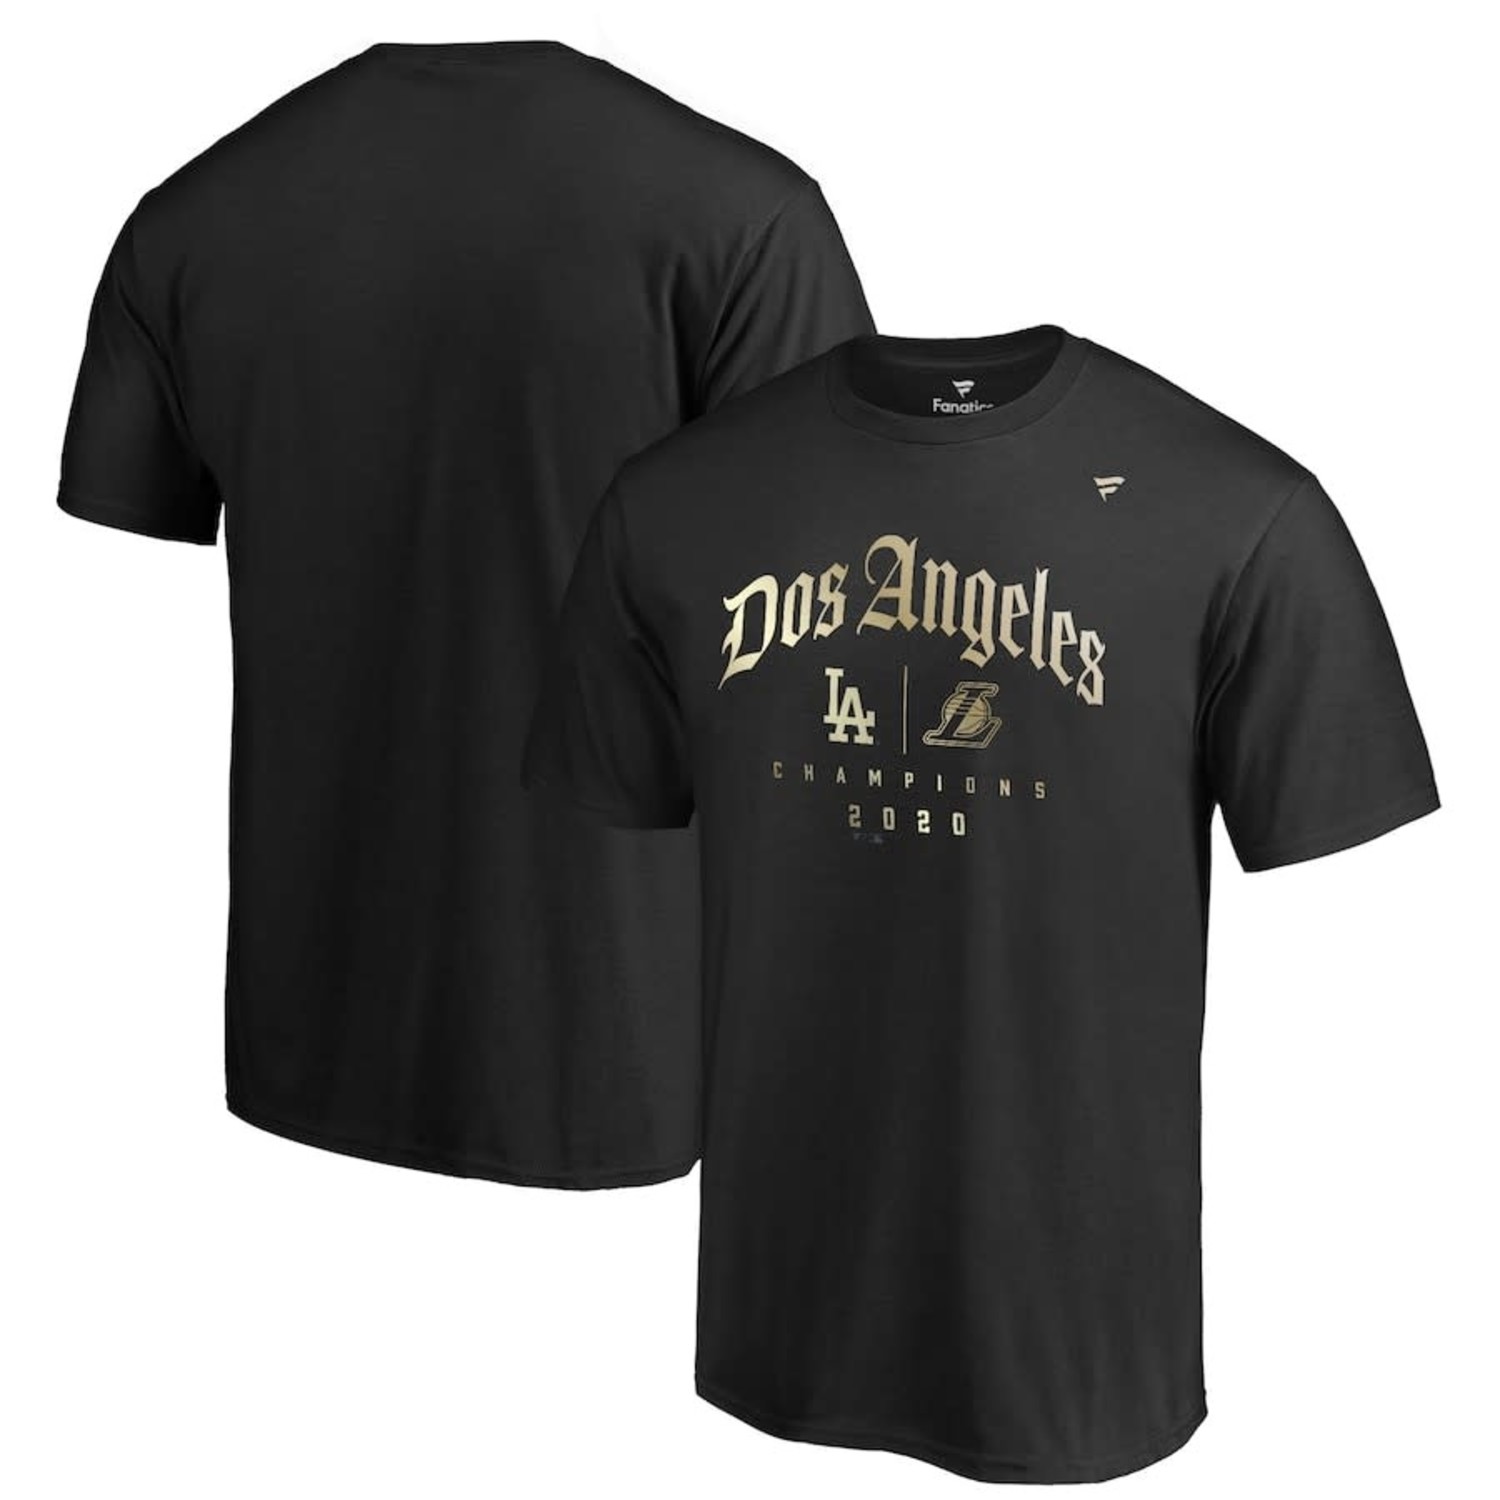 FANATICS LOS ANGELES DODGERS LAKERS 2020 Champions Black Long Sleeve Shirt  Sz L